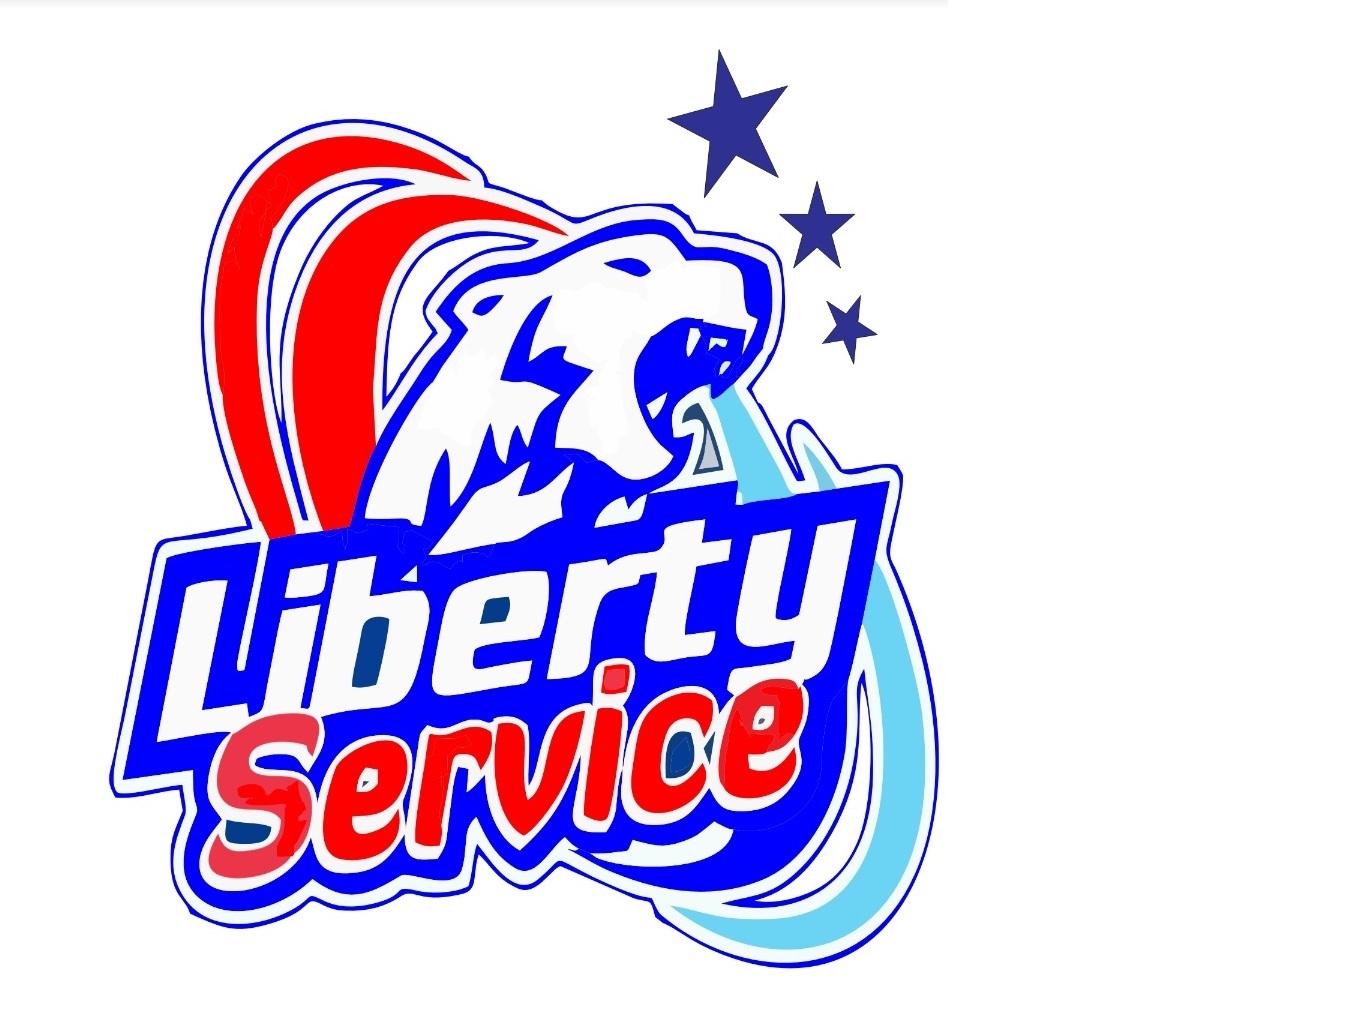 Liberty Service